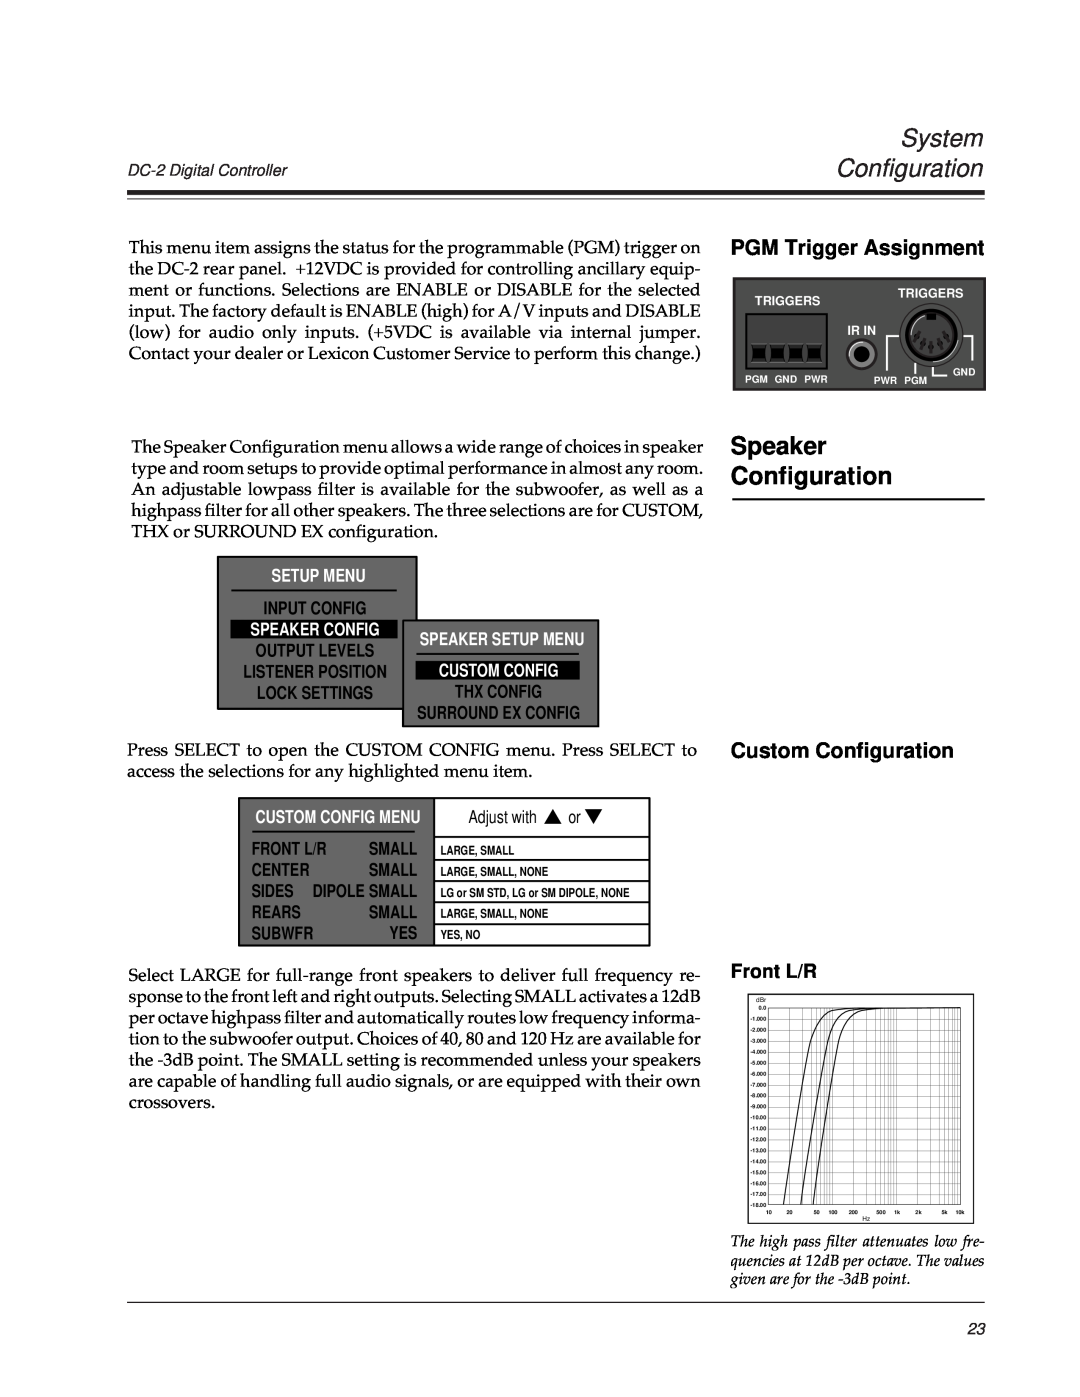 Lexicon DC-2 Speaker Configuration, PGM Trigger Assignment, Custom Configuration, Front L/R, System Configuration, Center 